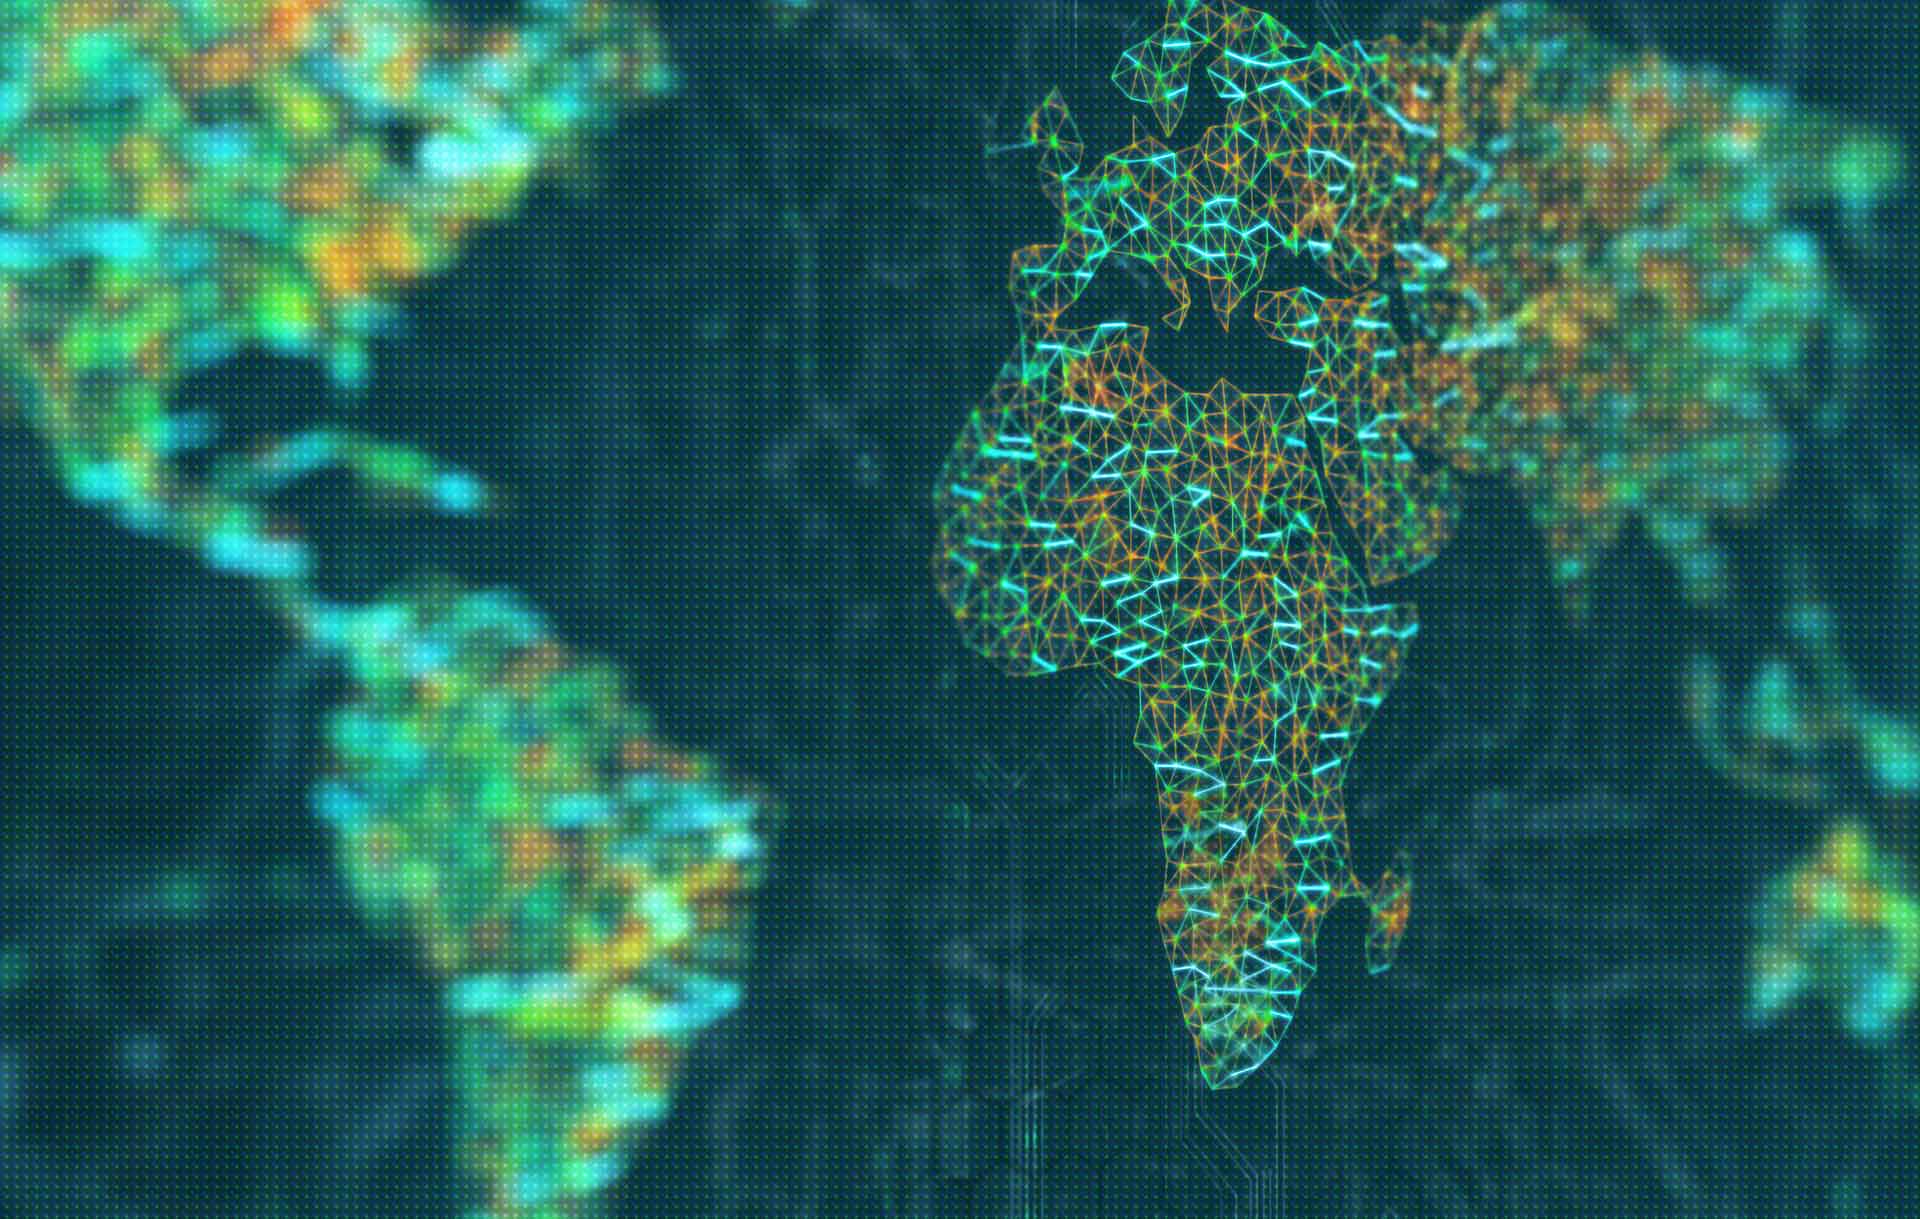 digital-world-map